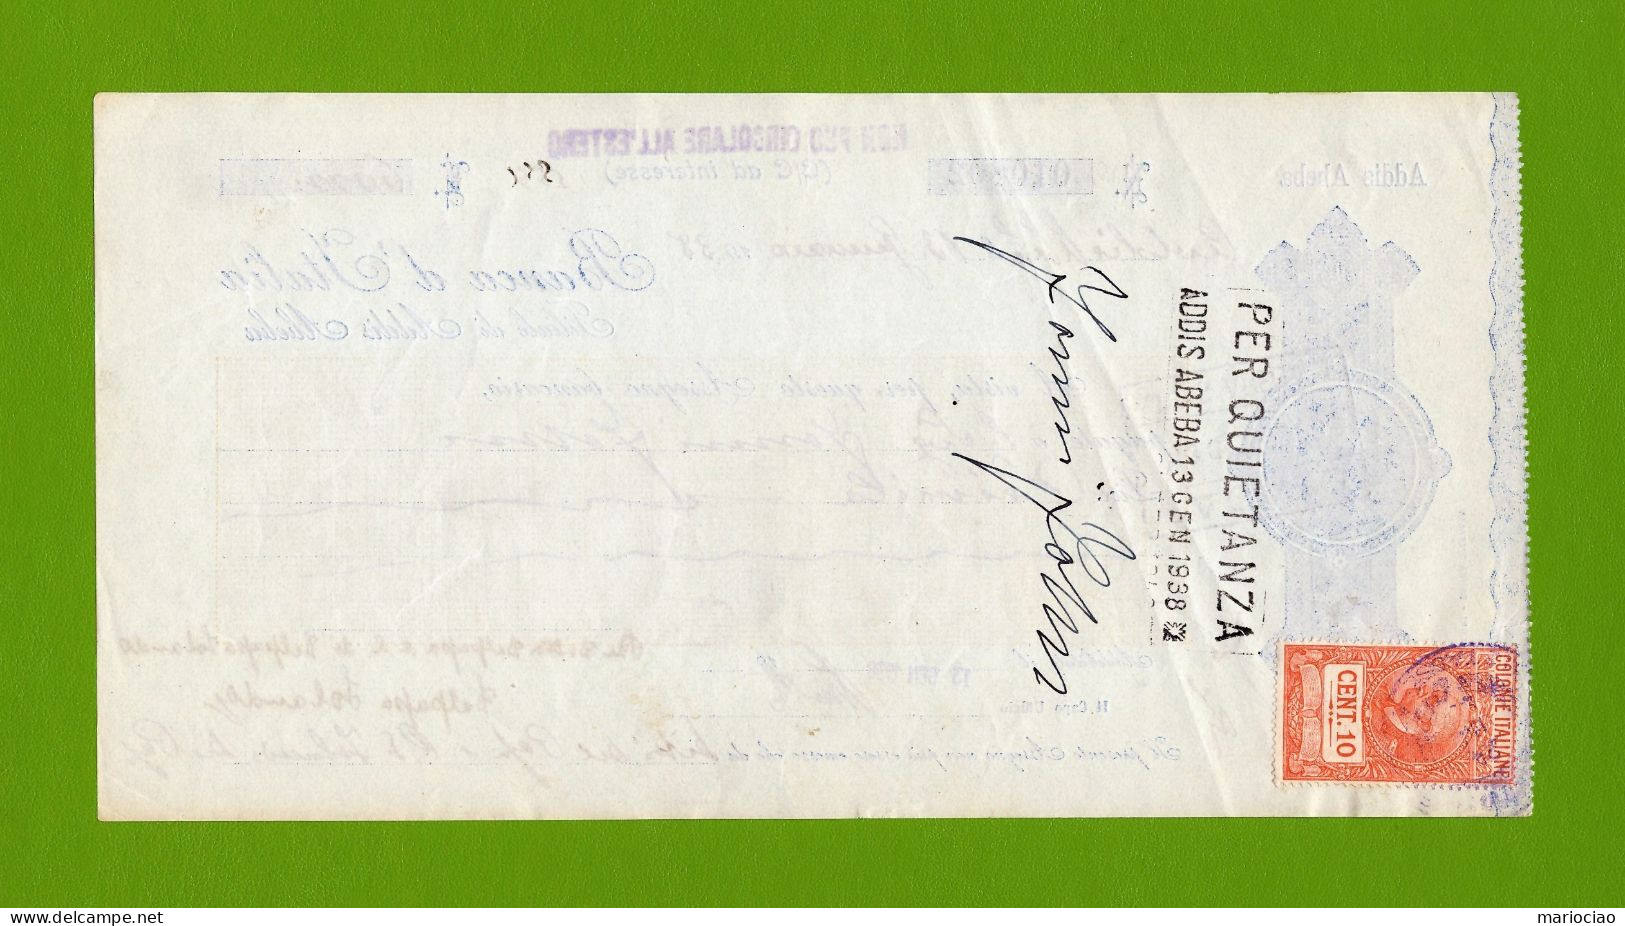 T-ITcheck Banca D'Italia Addis Abeba 1938 Giallo + Marca Fiscale - Banque & Assurance